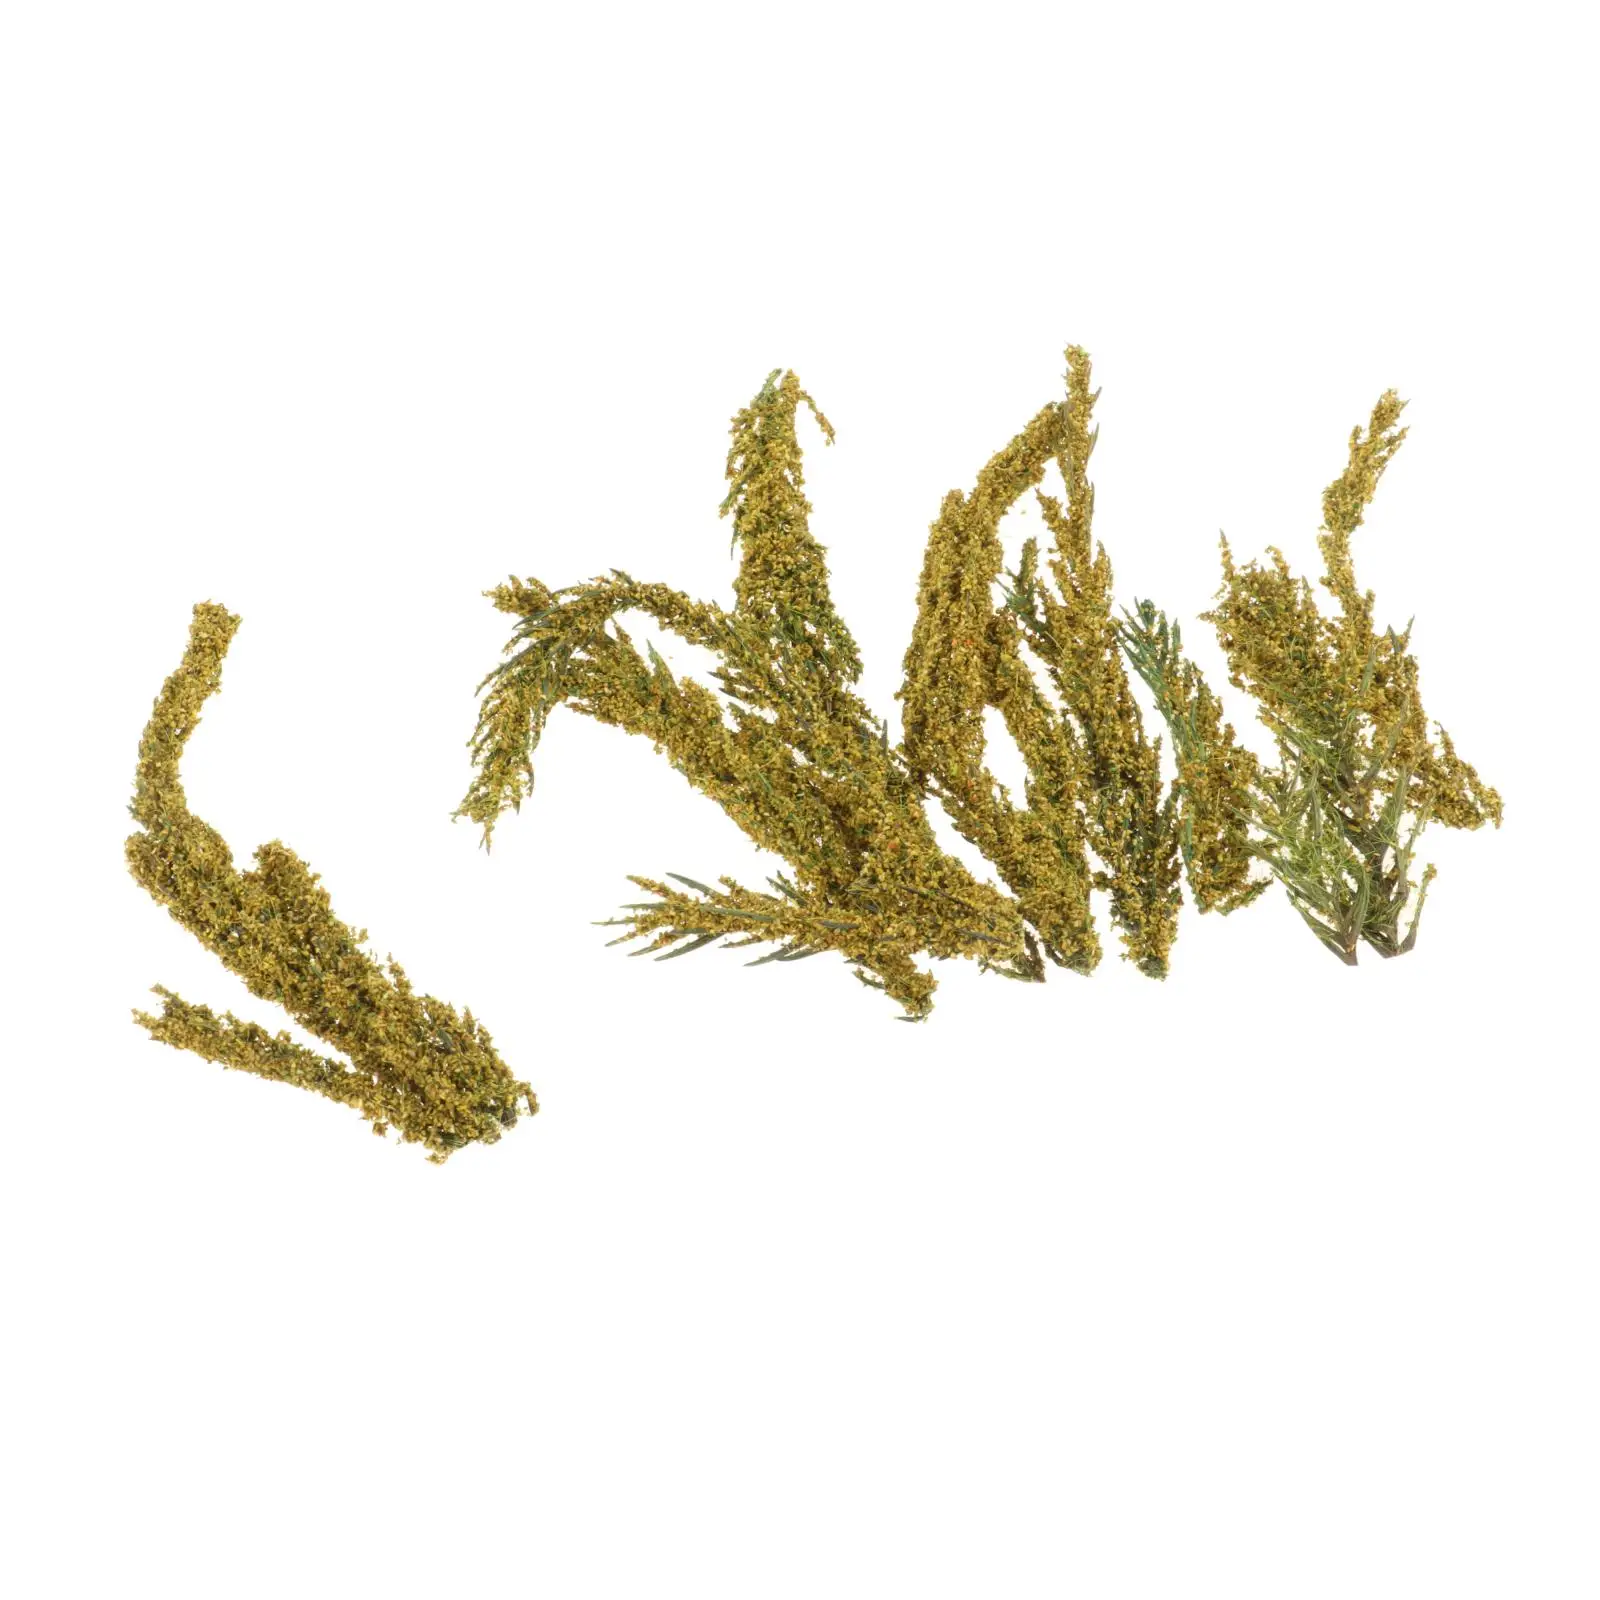  Long Shrub Vegetation groups Bush Miniature Grass Tufts Aritificial Plants for Model Train   Table Landscape